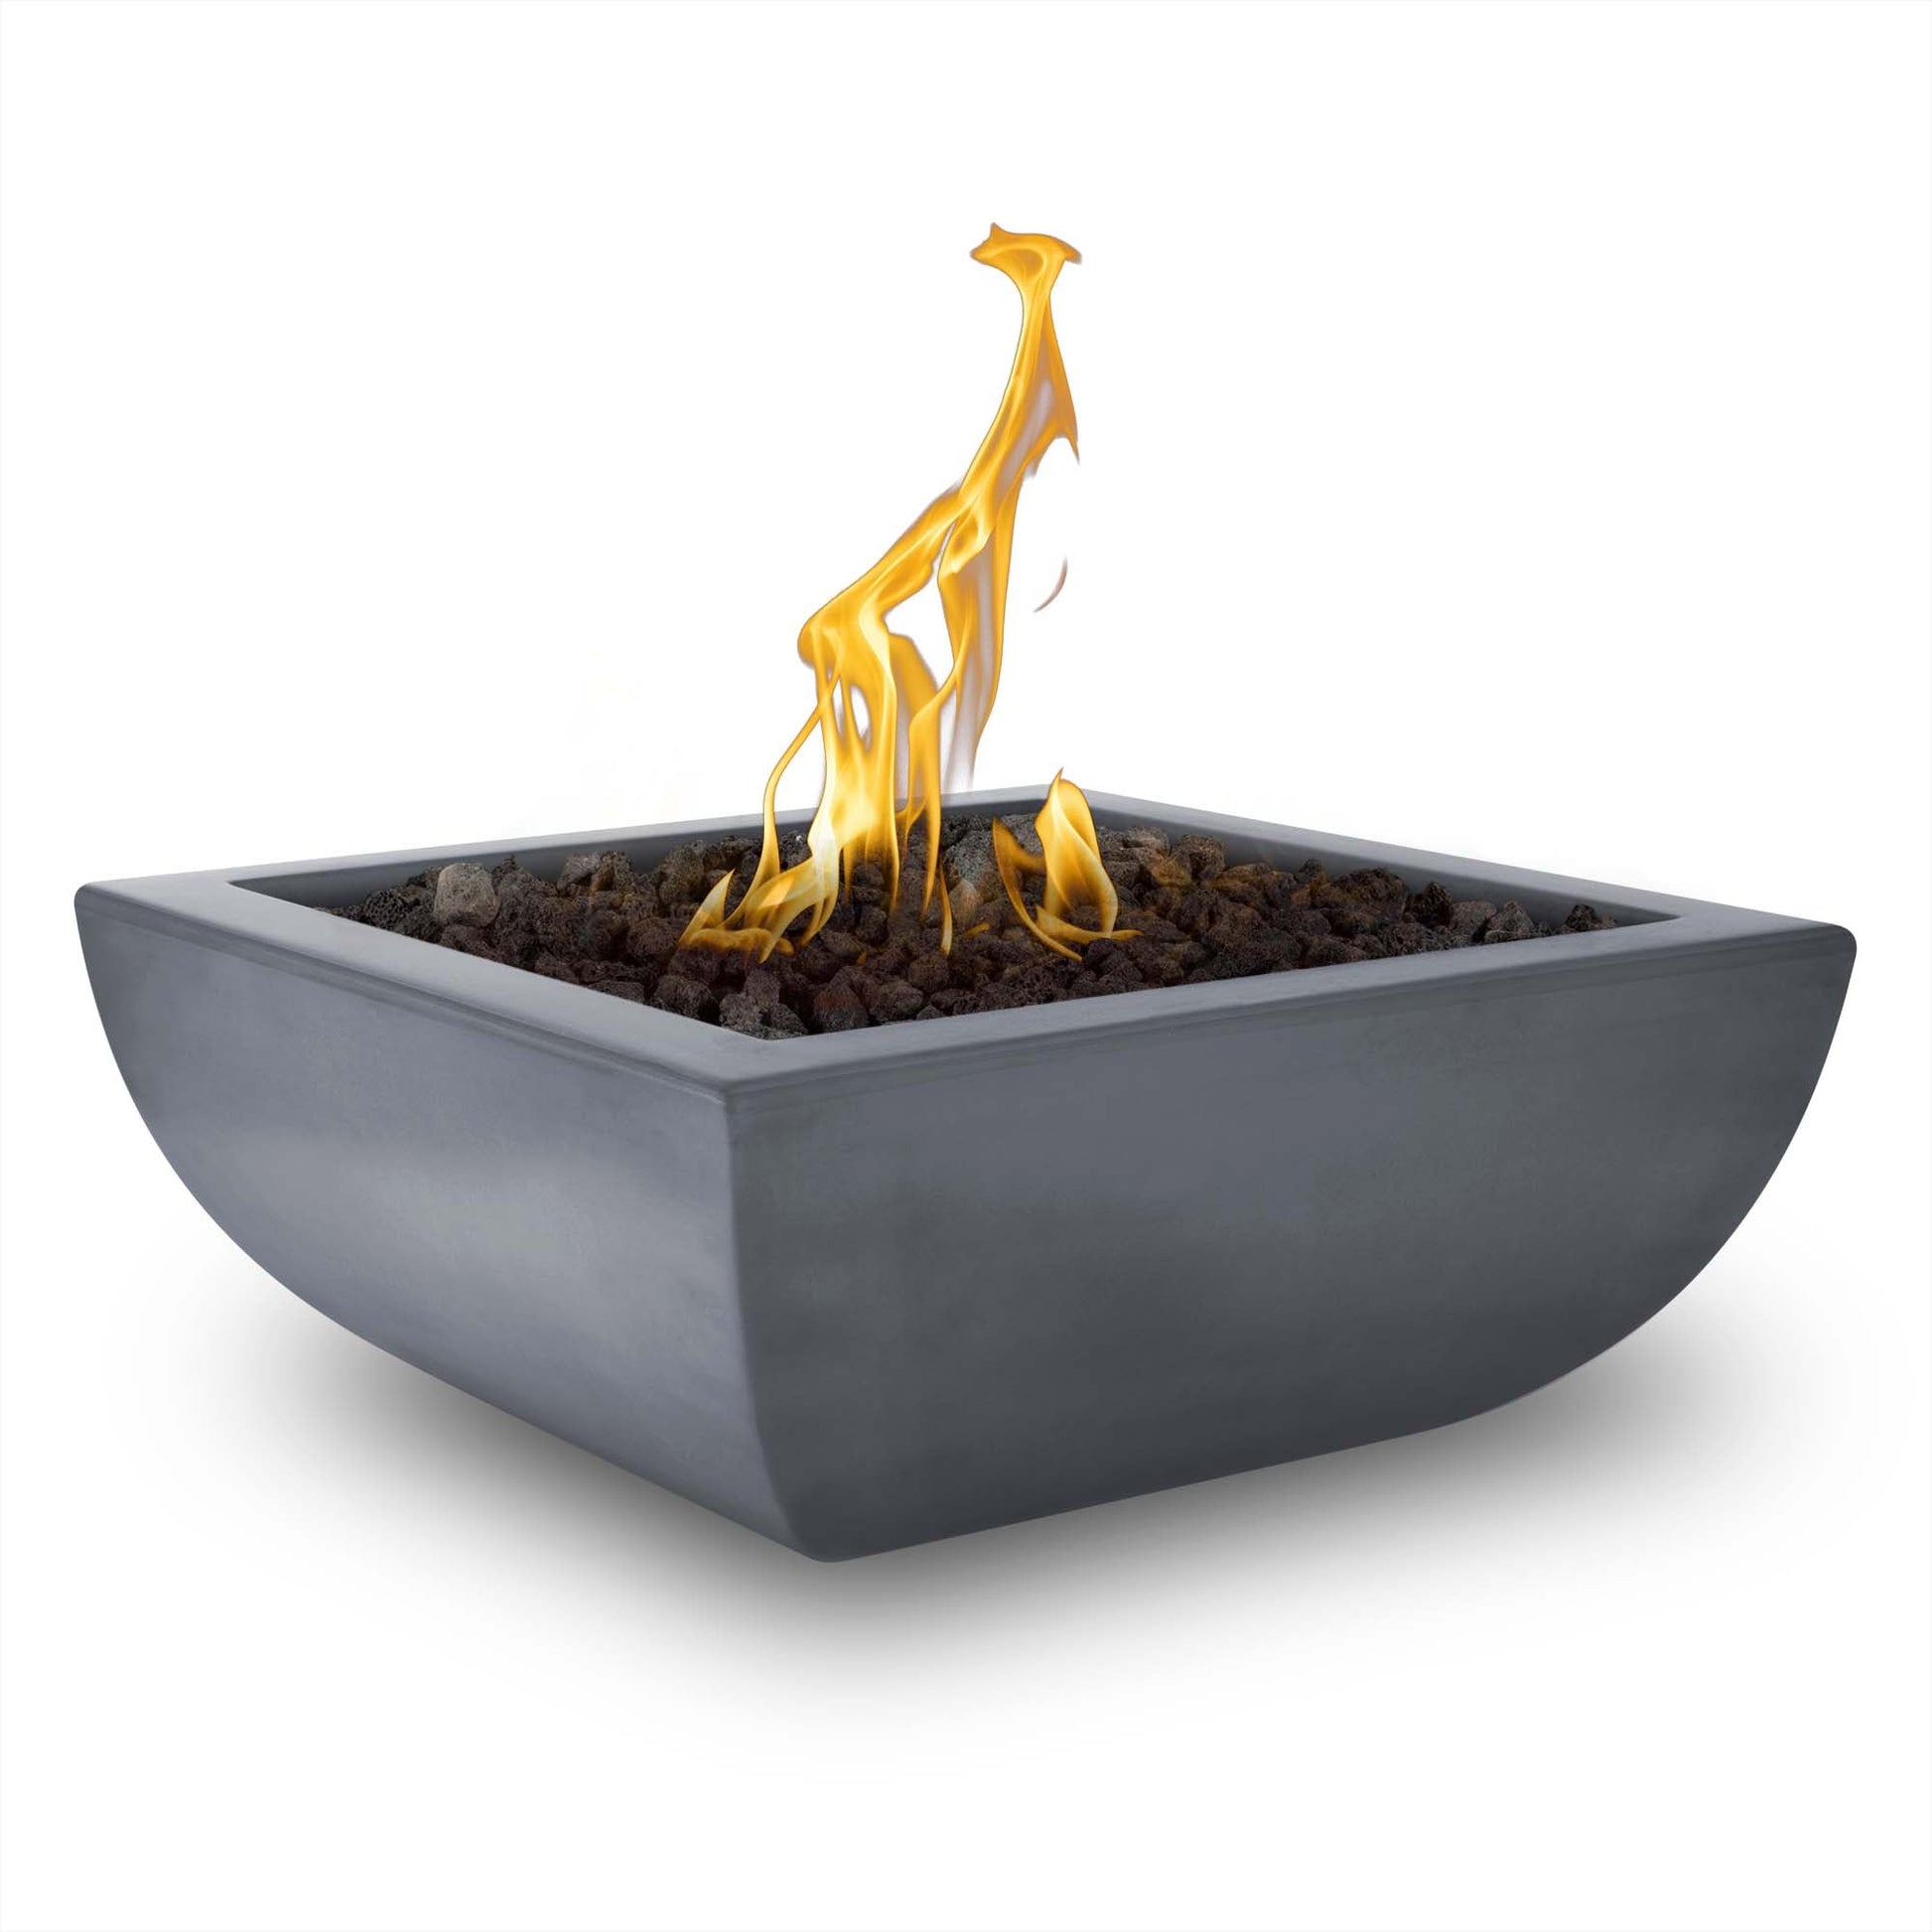 The Outdoor Plus Square Avalon 24" Metallic Bronze GFRC Concrete Liquid Propane Fire Bowl with Match Lit with Flame Sense Ignition